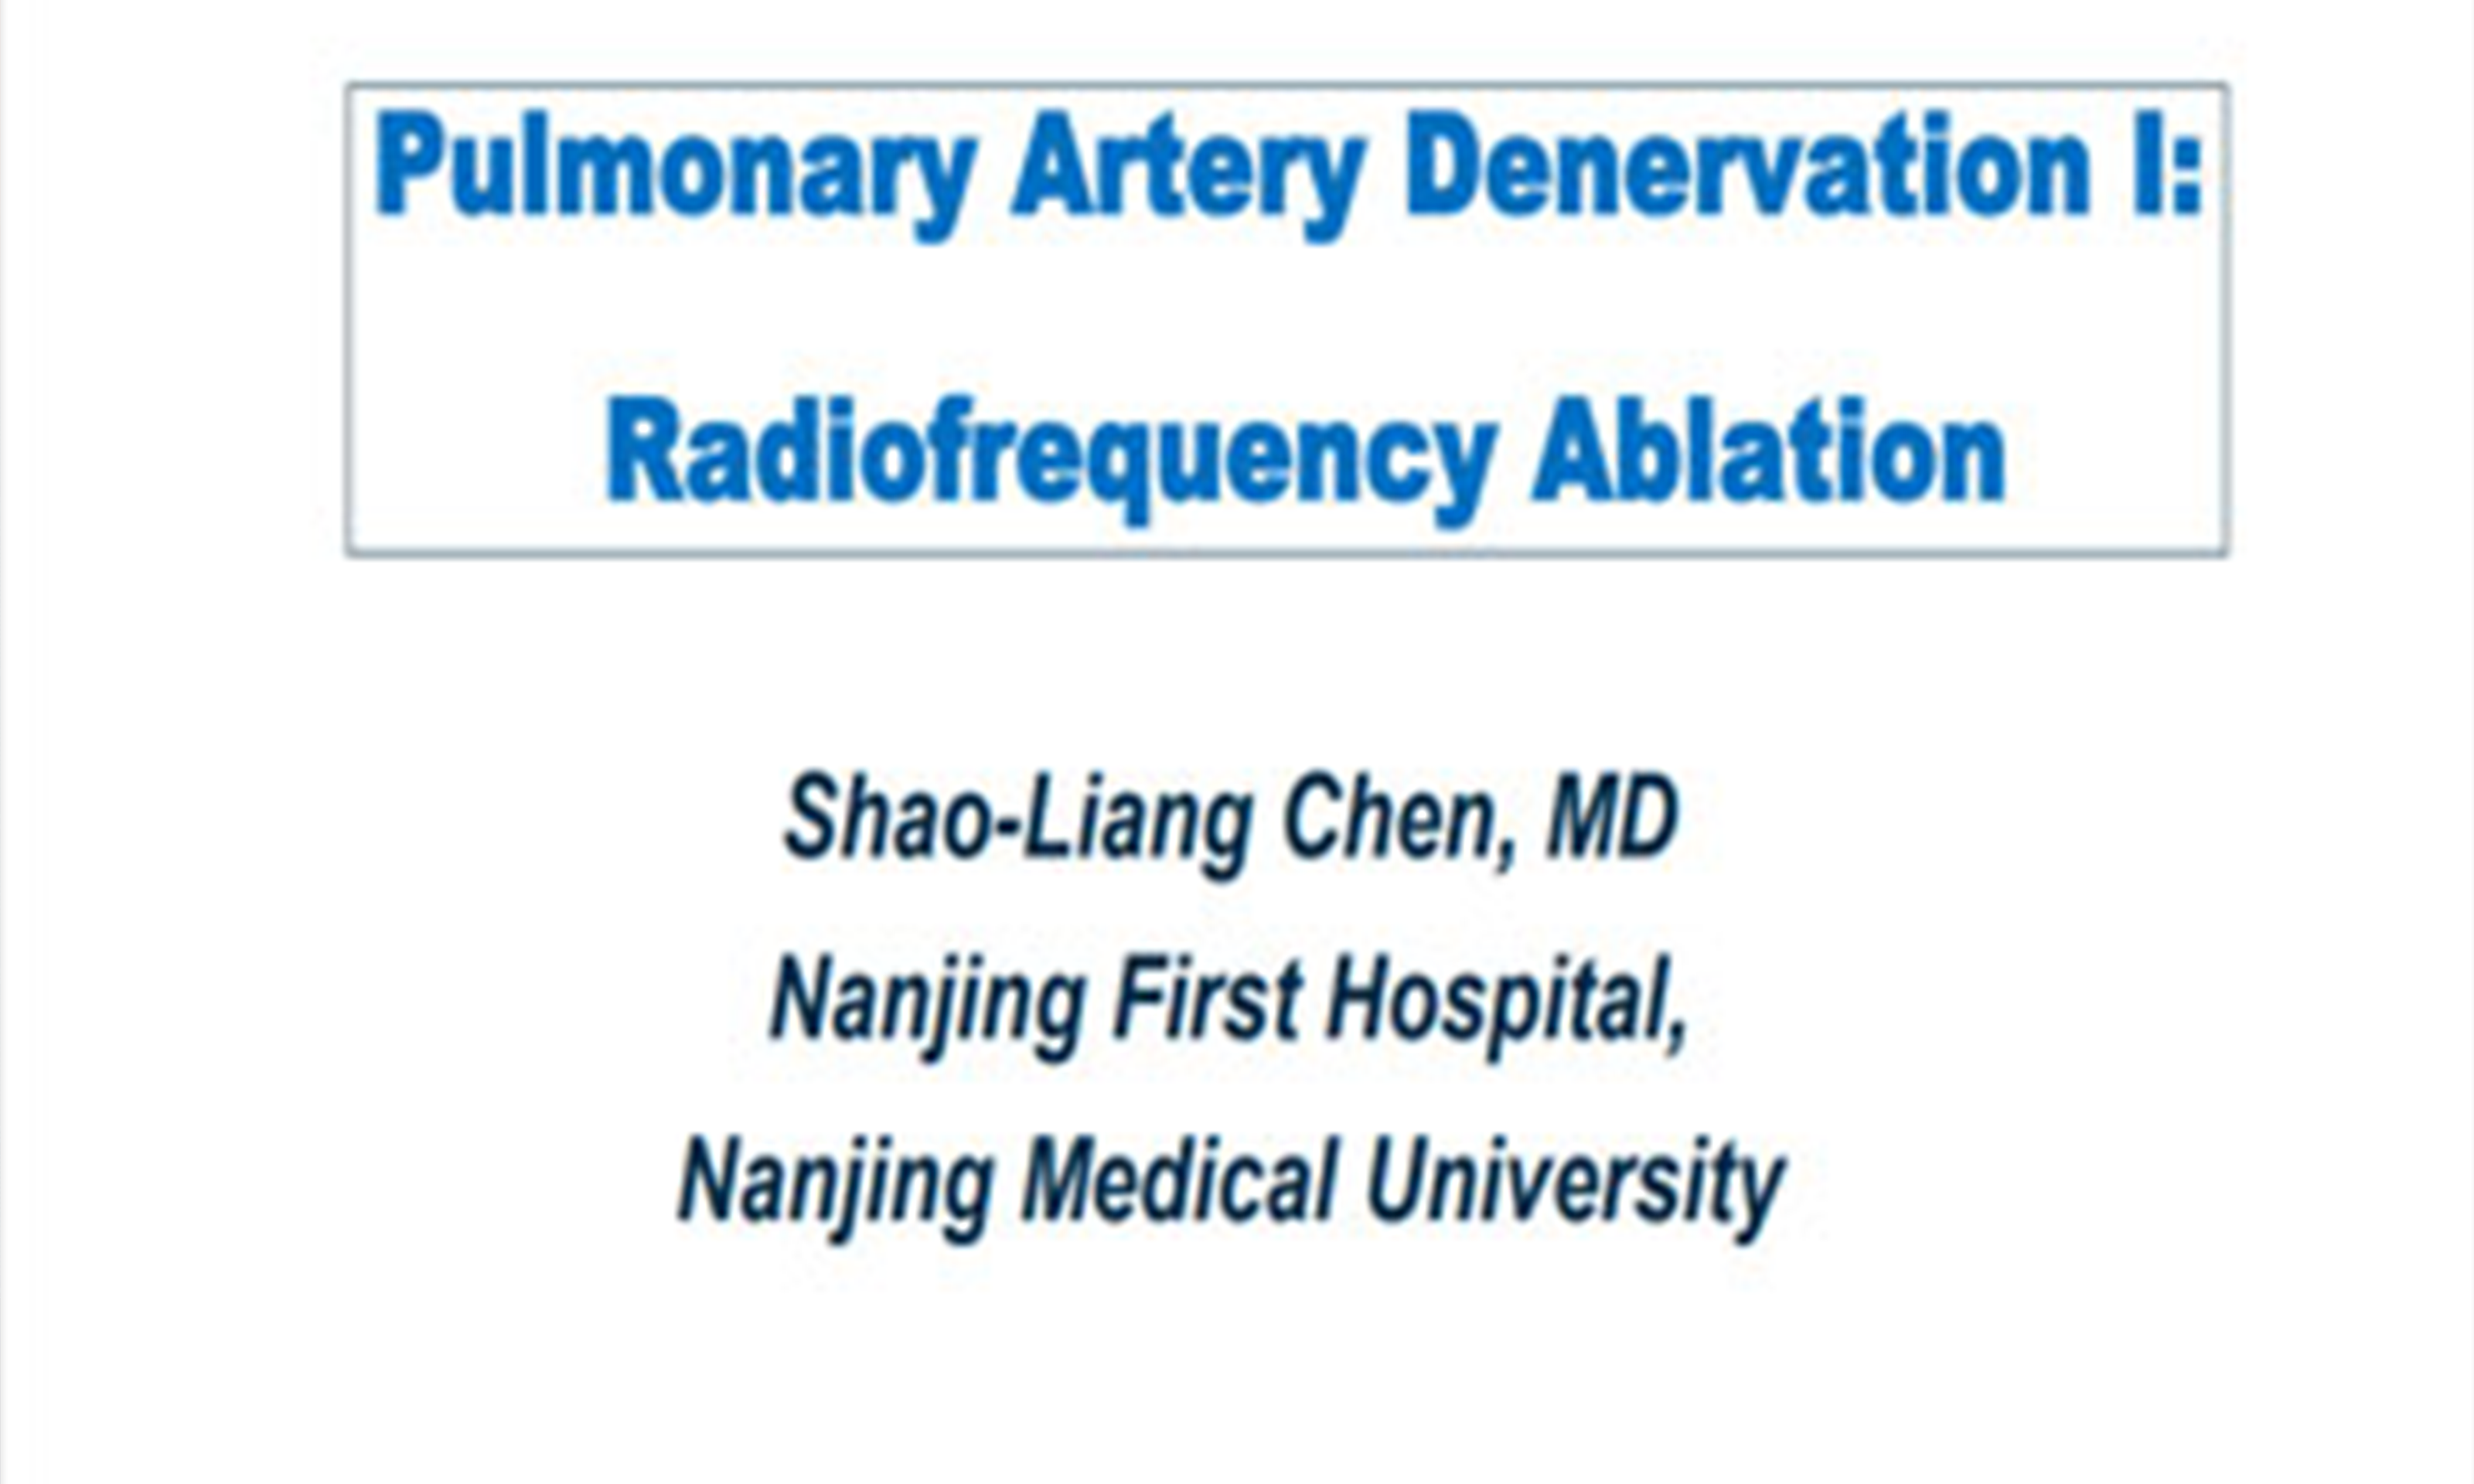 Pulmonary Artery Denervation I: Radiofrequency Ablation